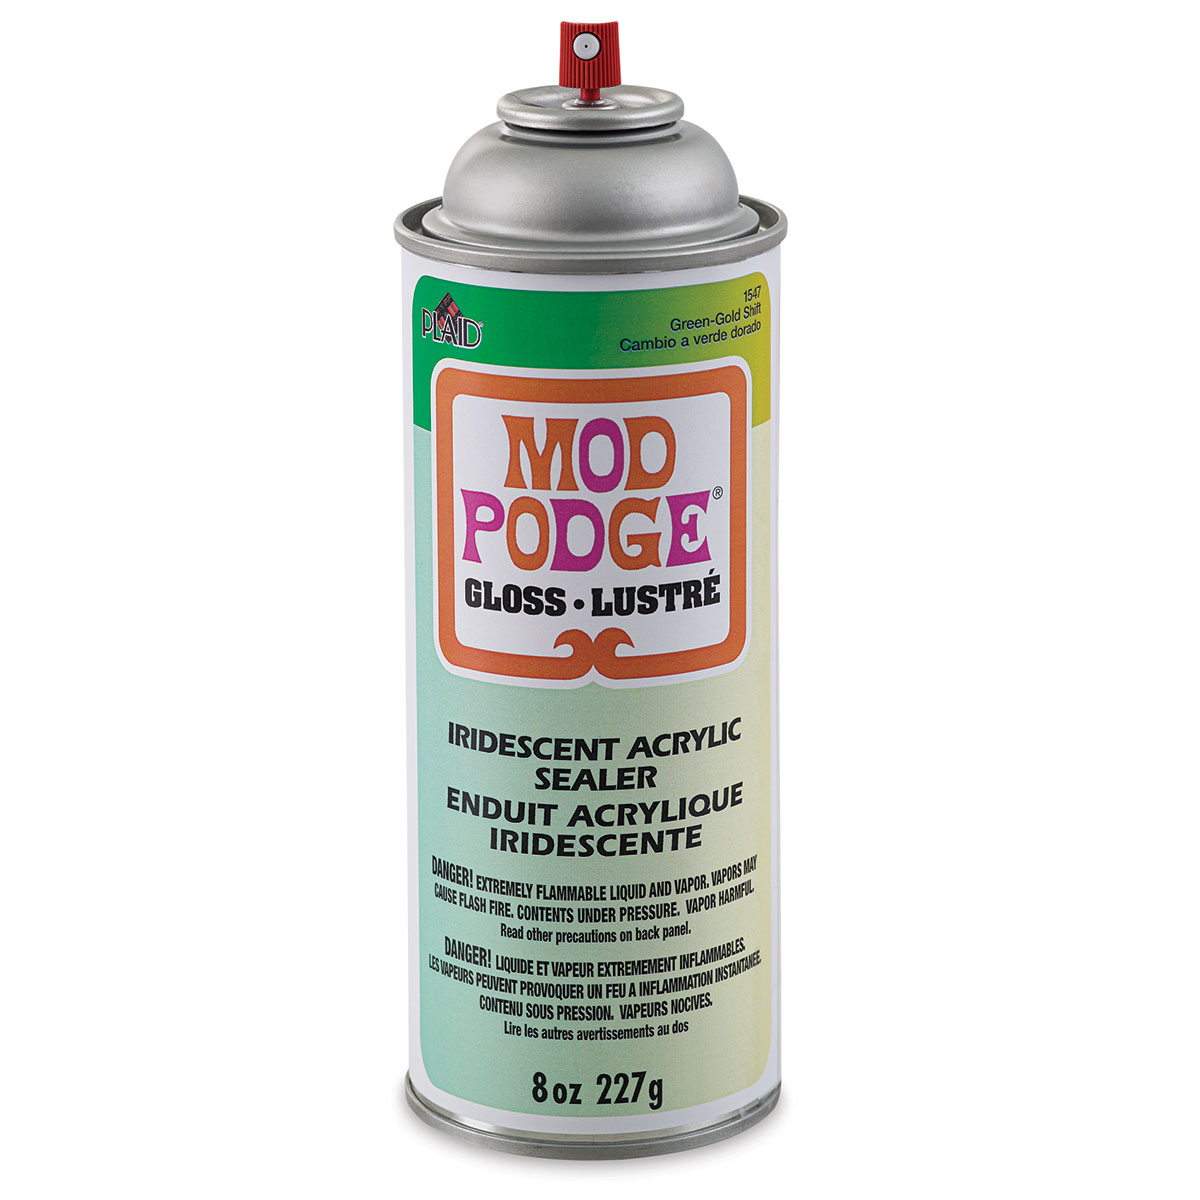 Mod Podge Green to Gold Shift Gloss Iridescent Acrylic Sealer - 8 oz